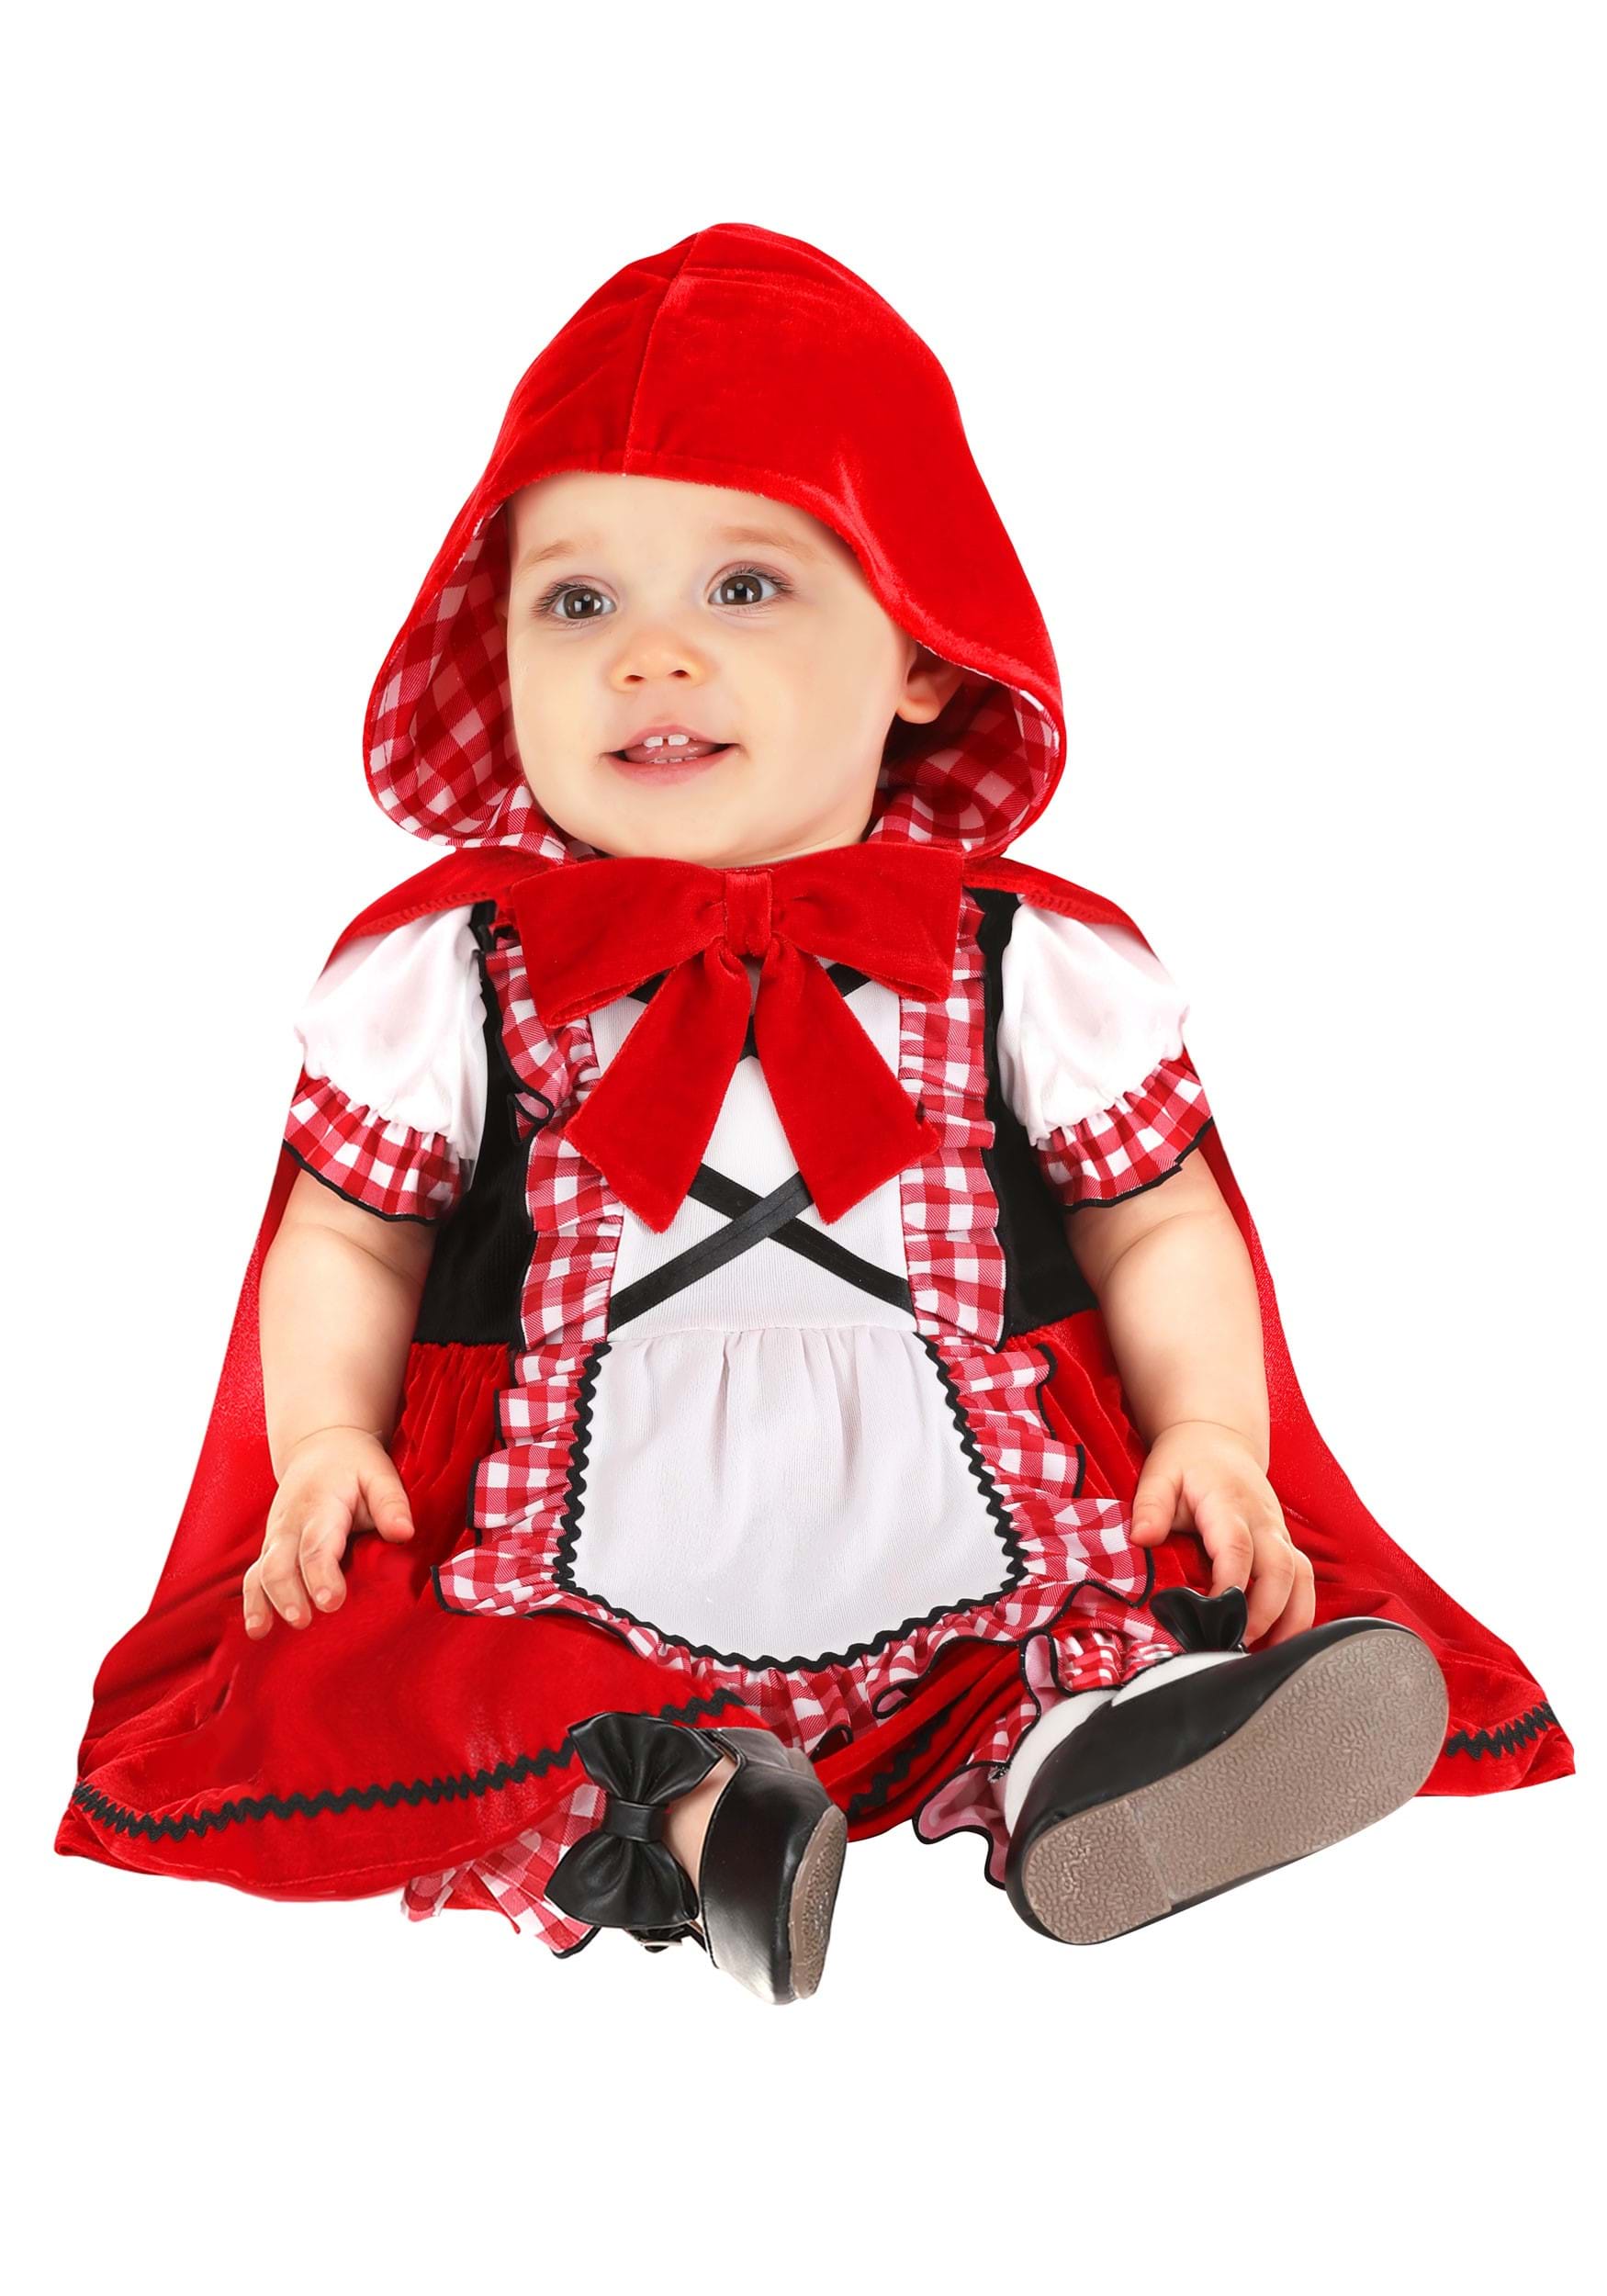 Classic Red Riding Hood Infants Costume